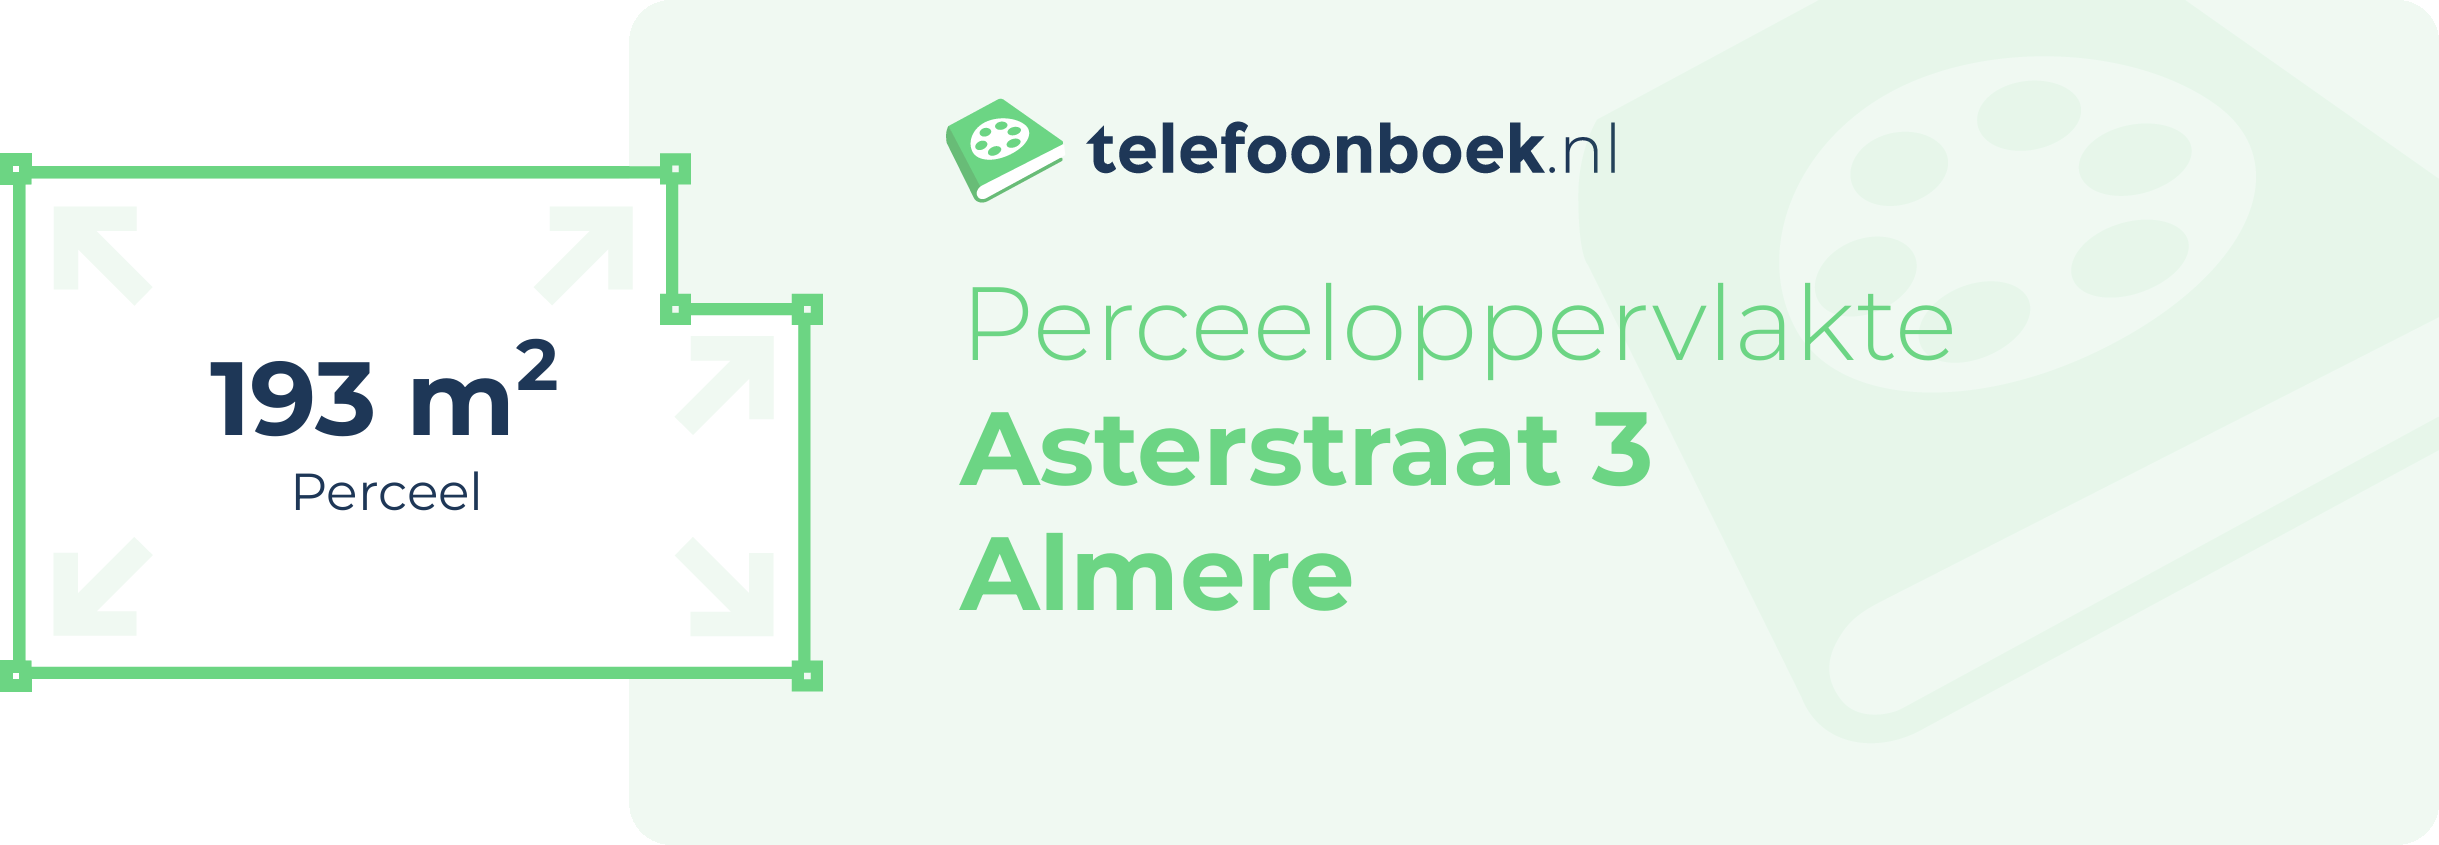 Perceeloppervlakte Asterstraat 3 Almere